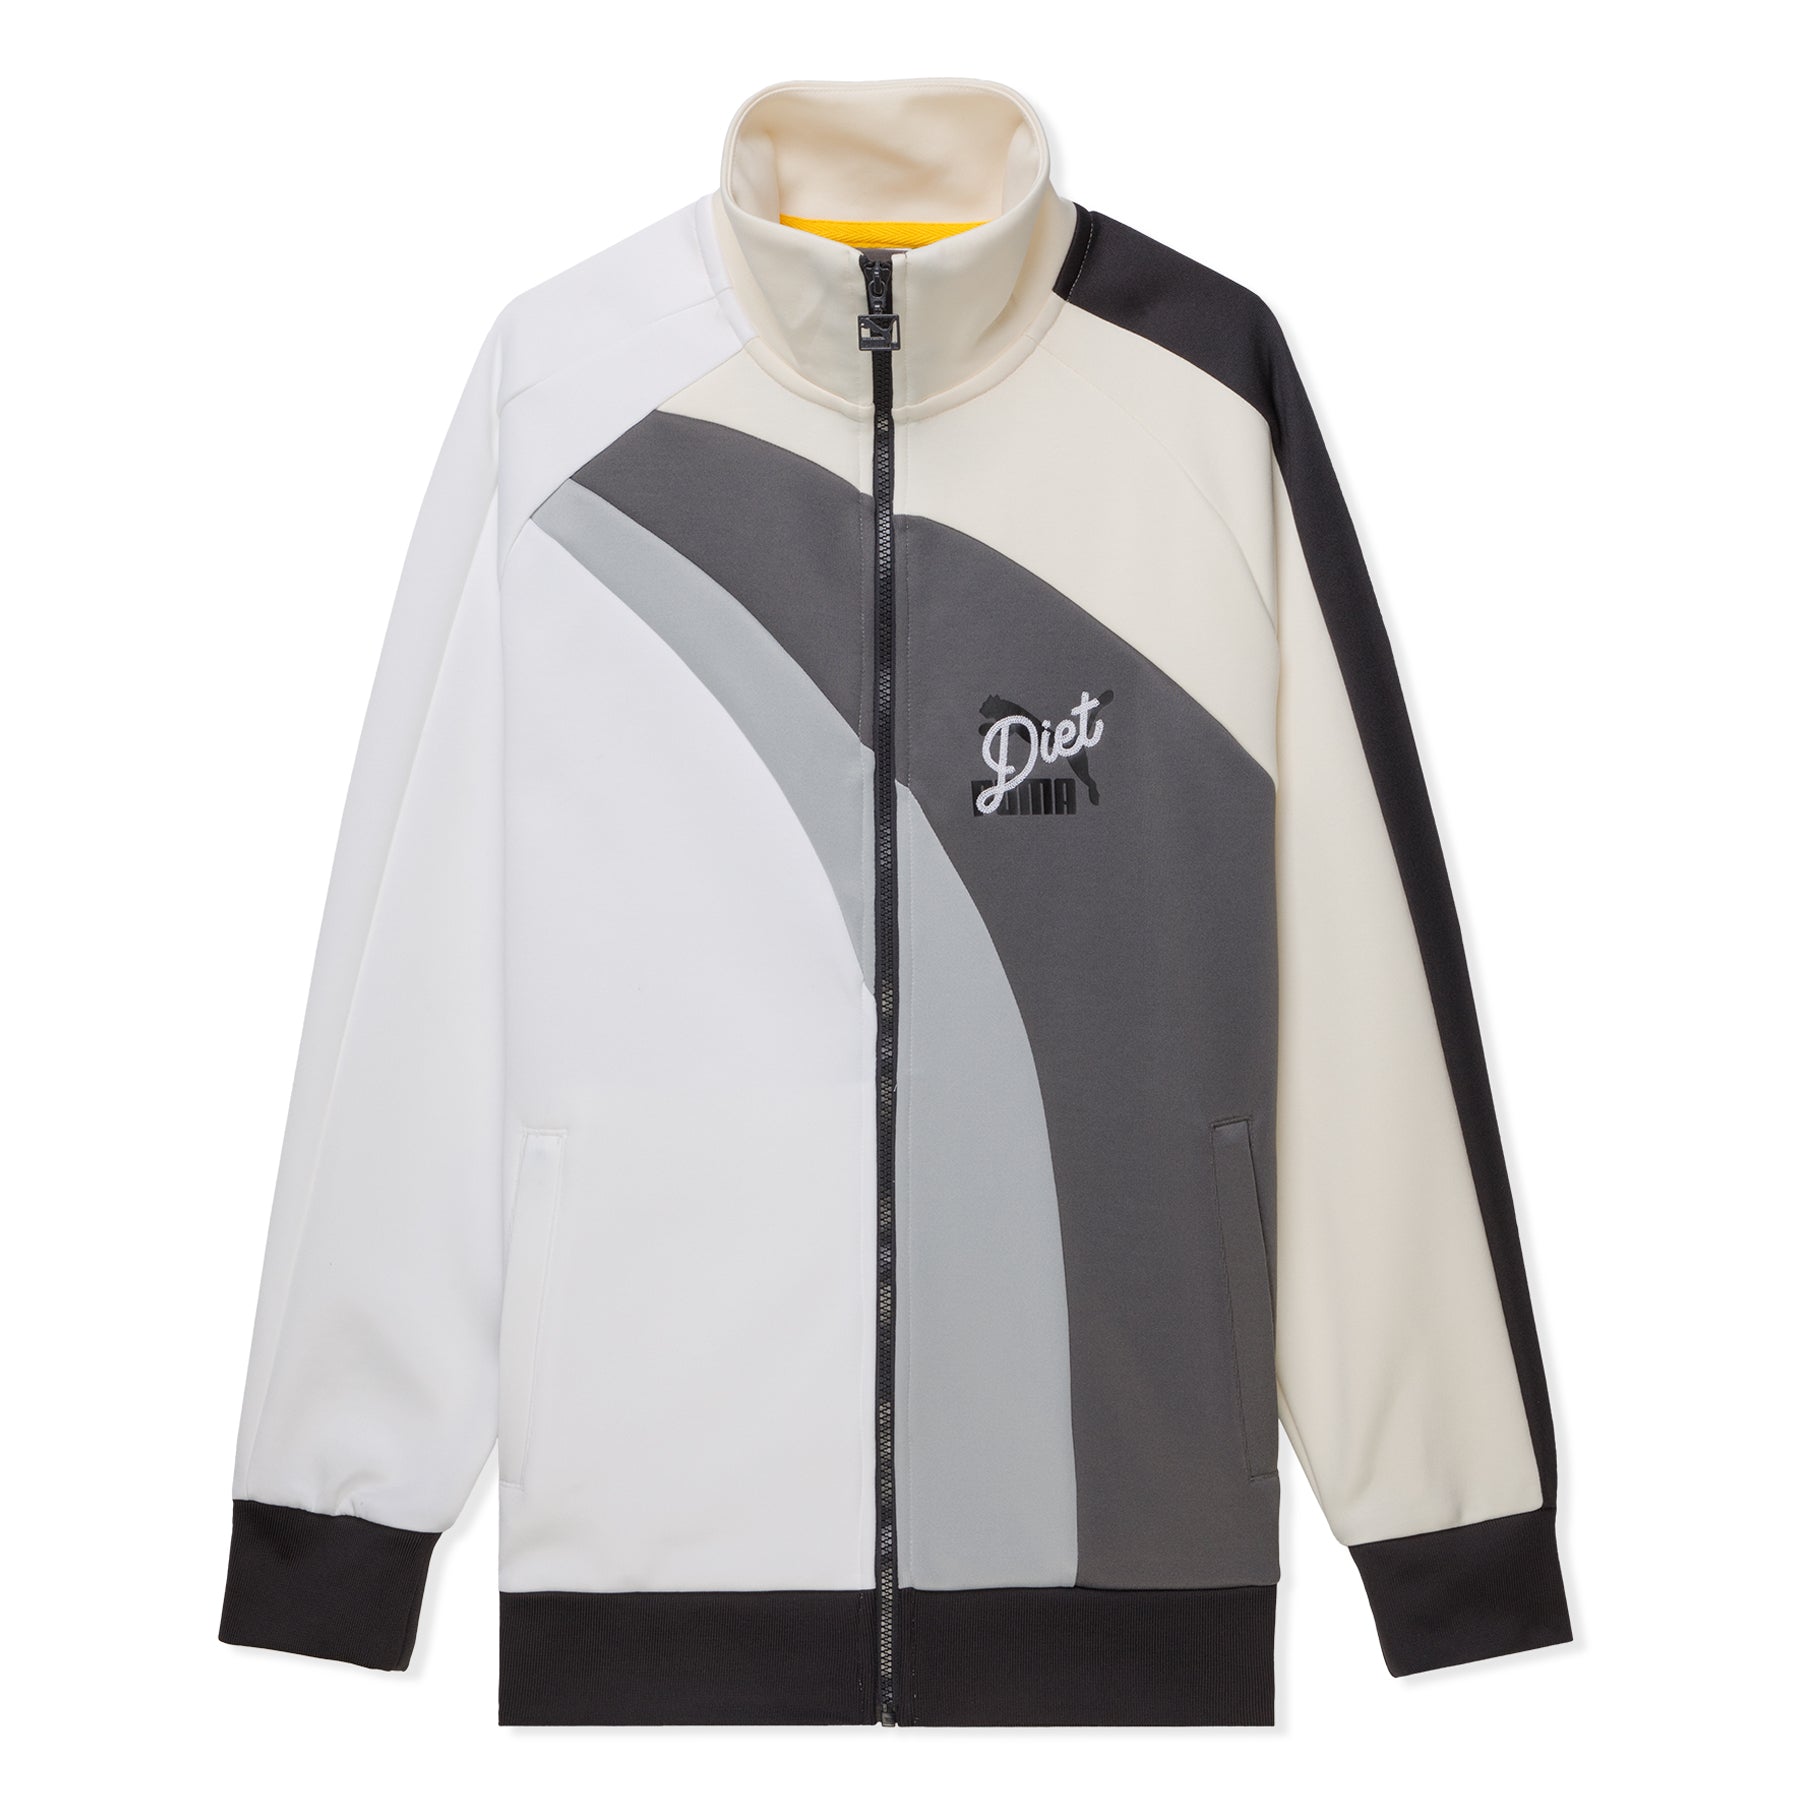 Puma x Diet Starts Monday Concepts (White) T7 – Jacket